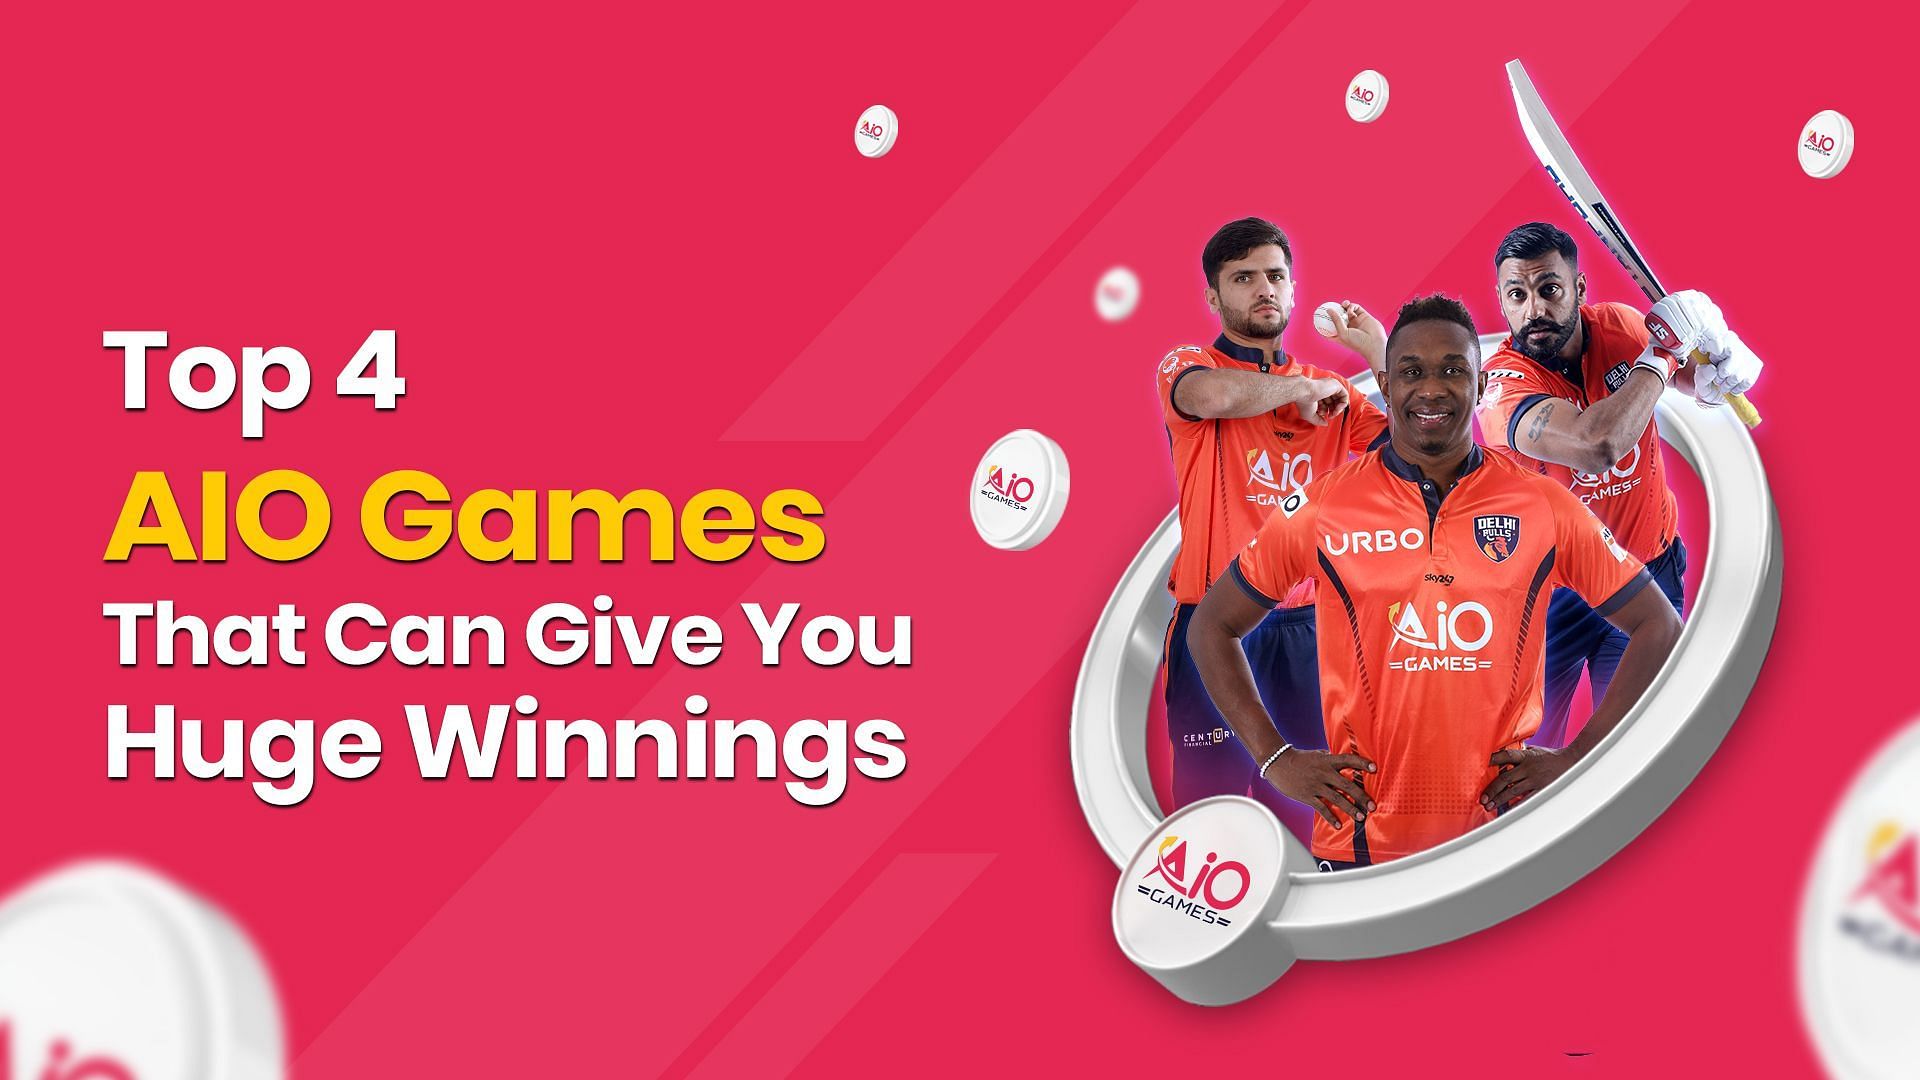 Top 4 games to win money on AIO Games (Image via AIO App)